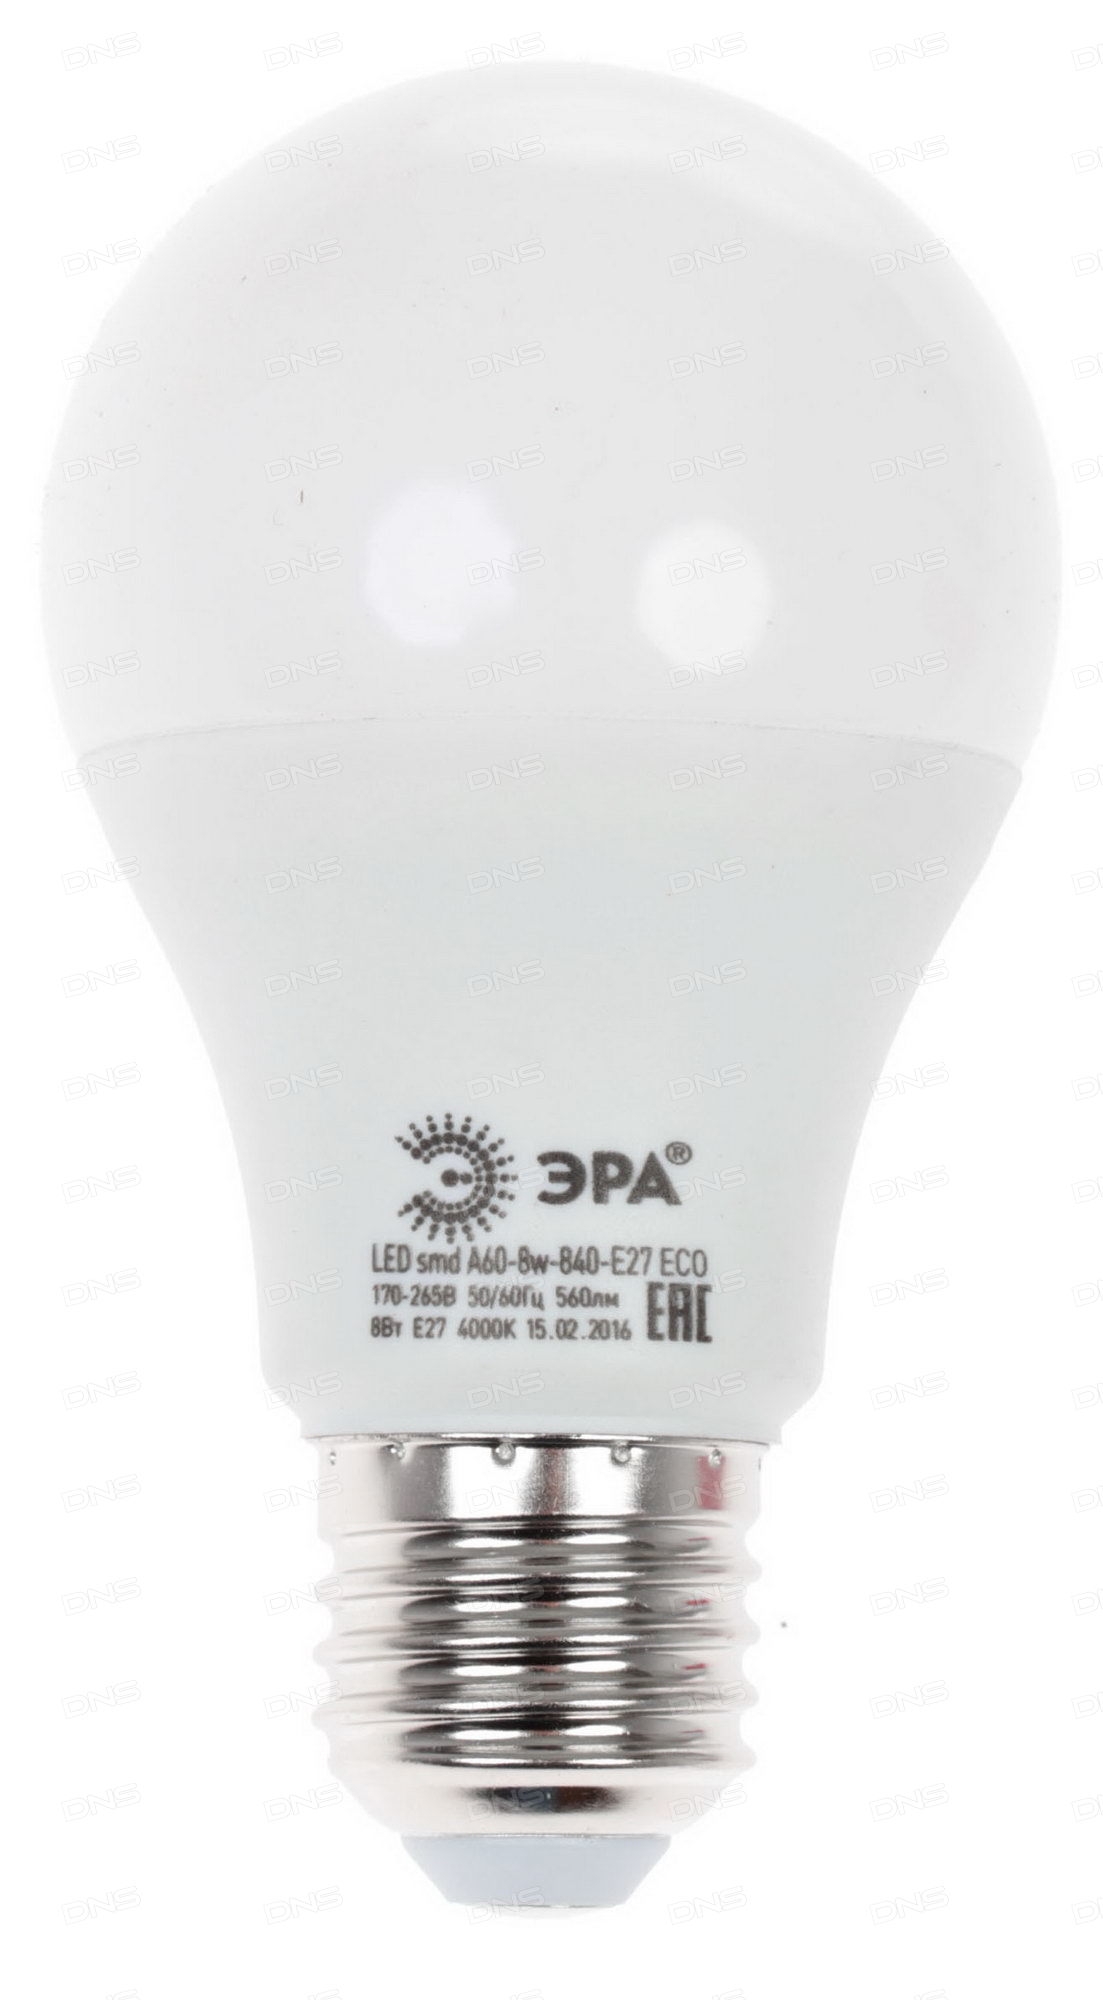 Лампа светодиодная ЭРА LED smd A60-8w-840-E27 ECO